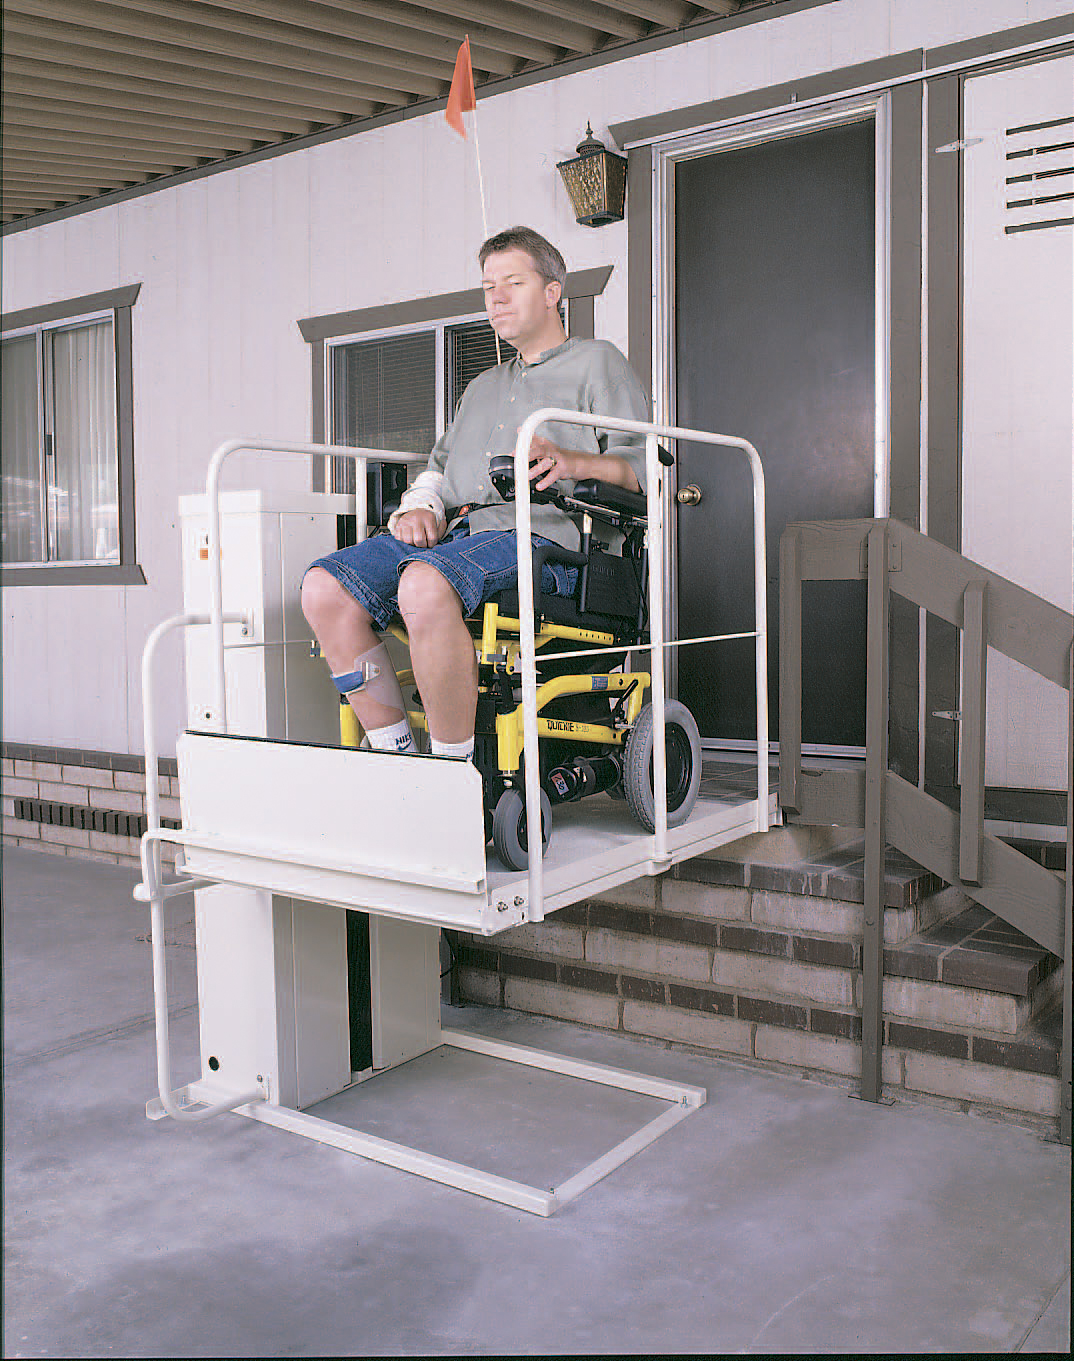 Long Beach wheelchair elevator vpl mobile home vertical platform